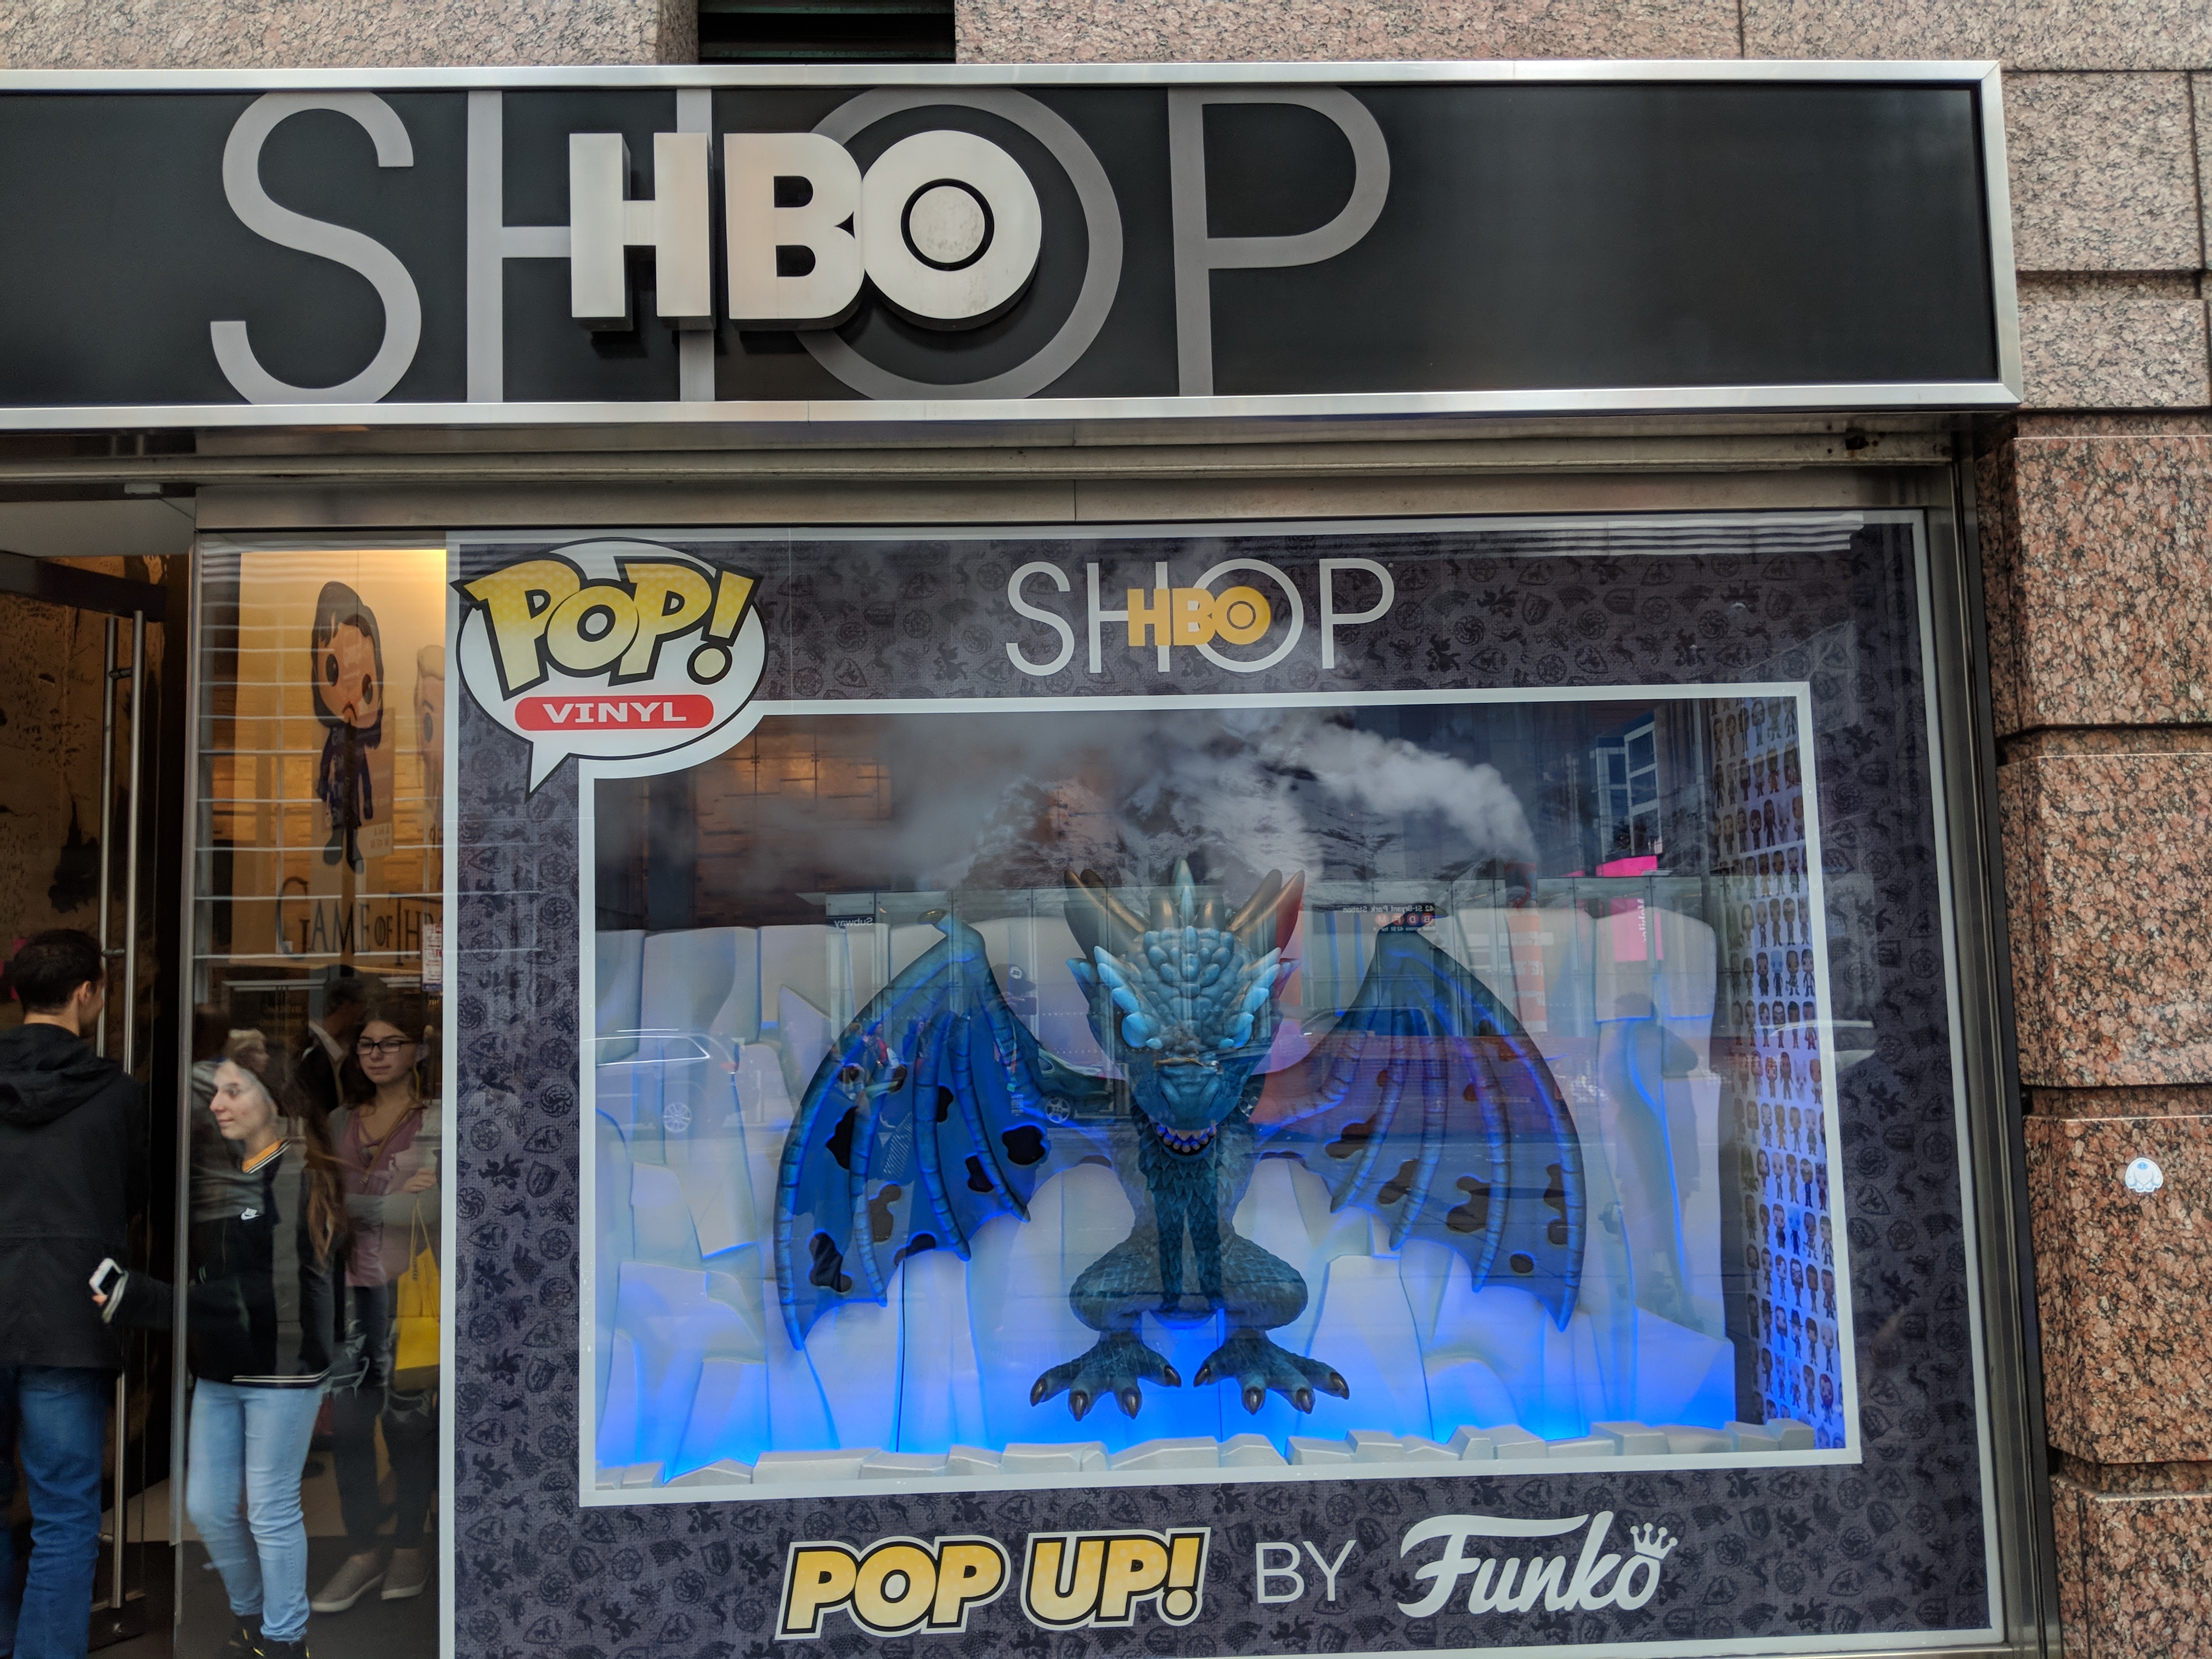 HBO Shop